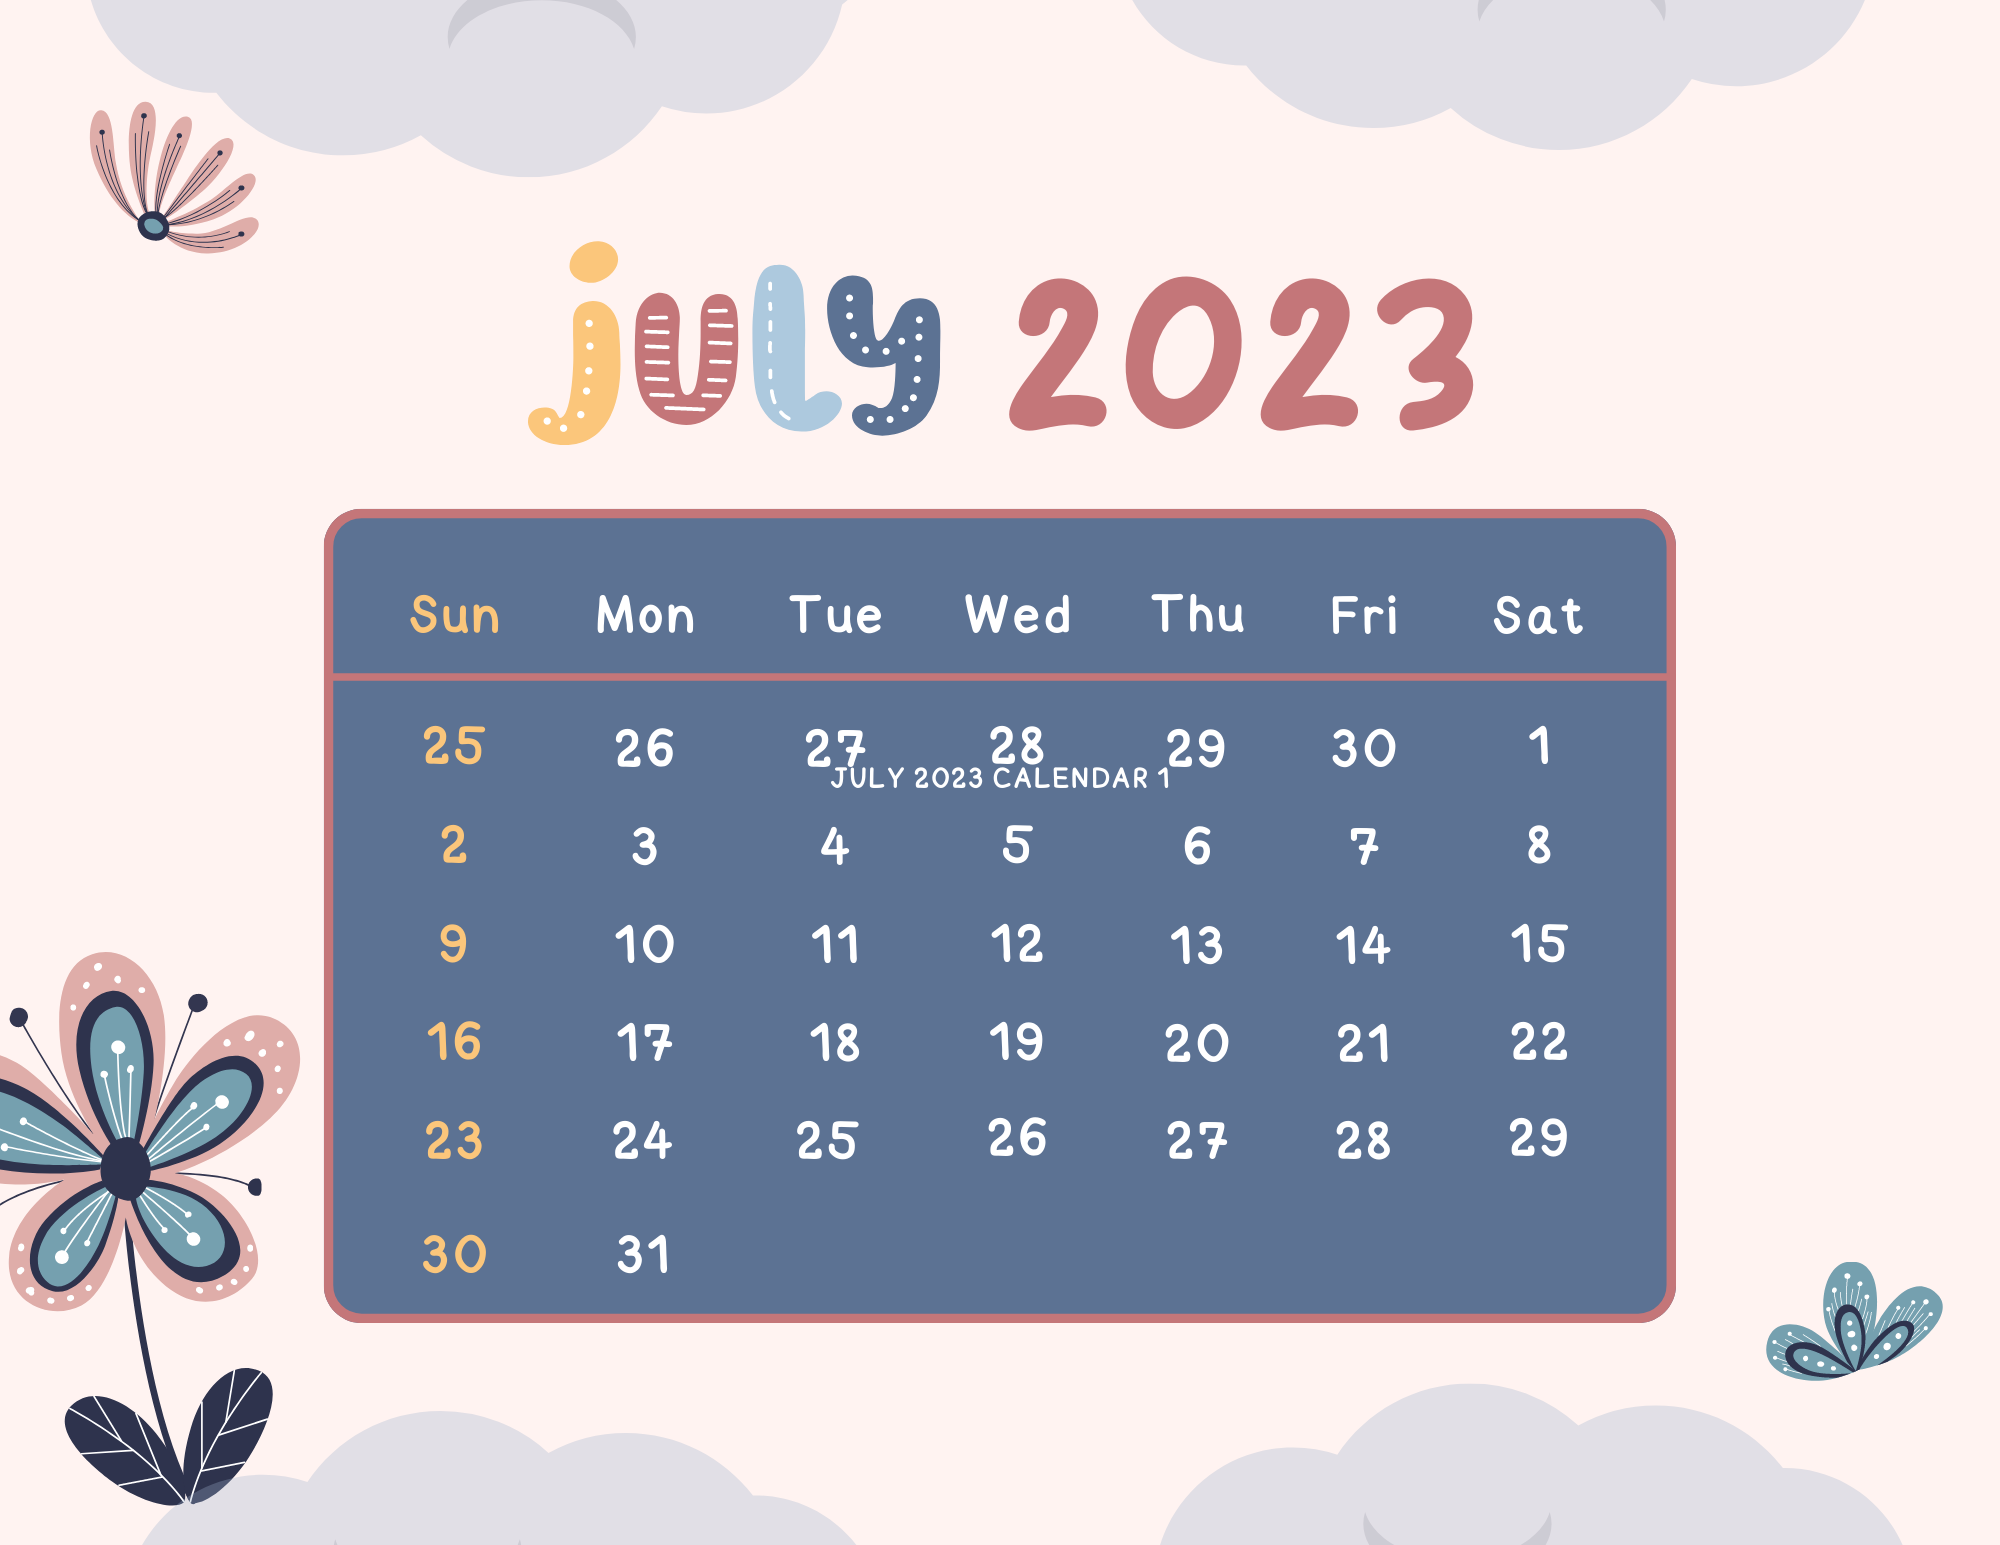 July 2023 Calendar 2